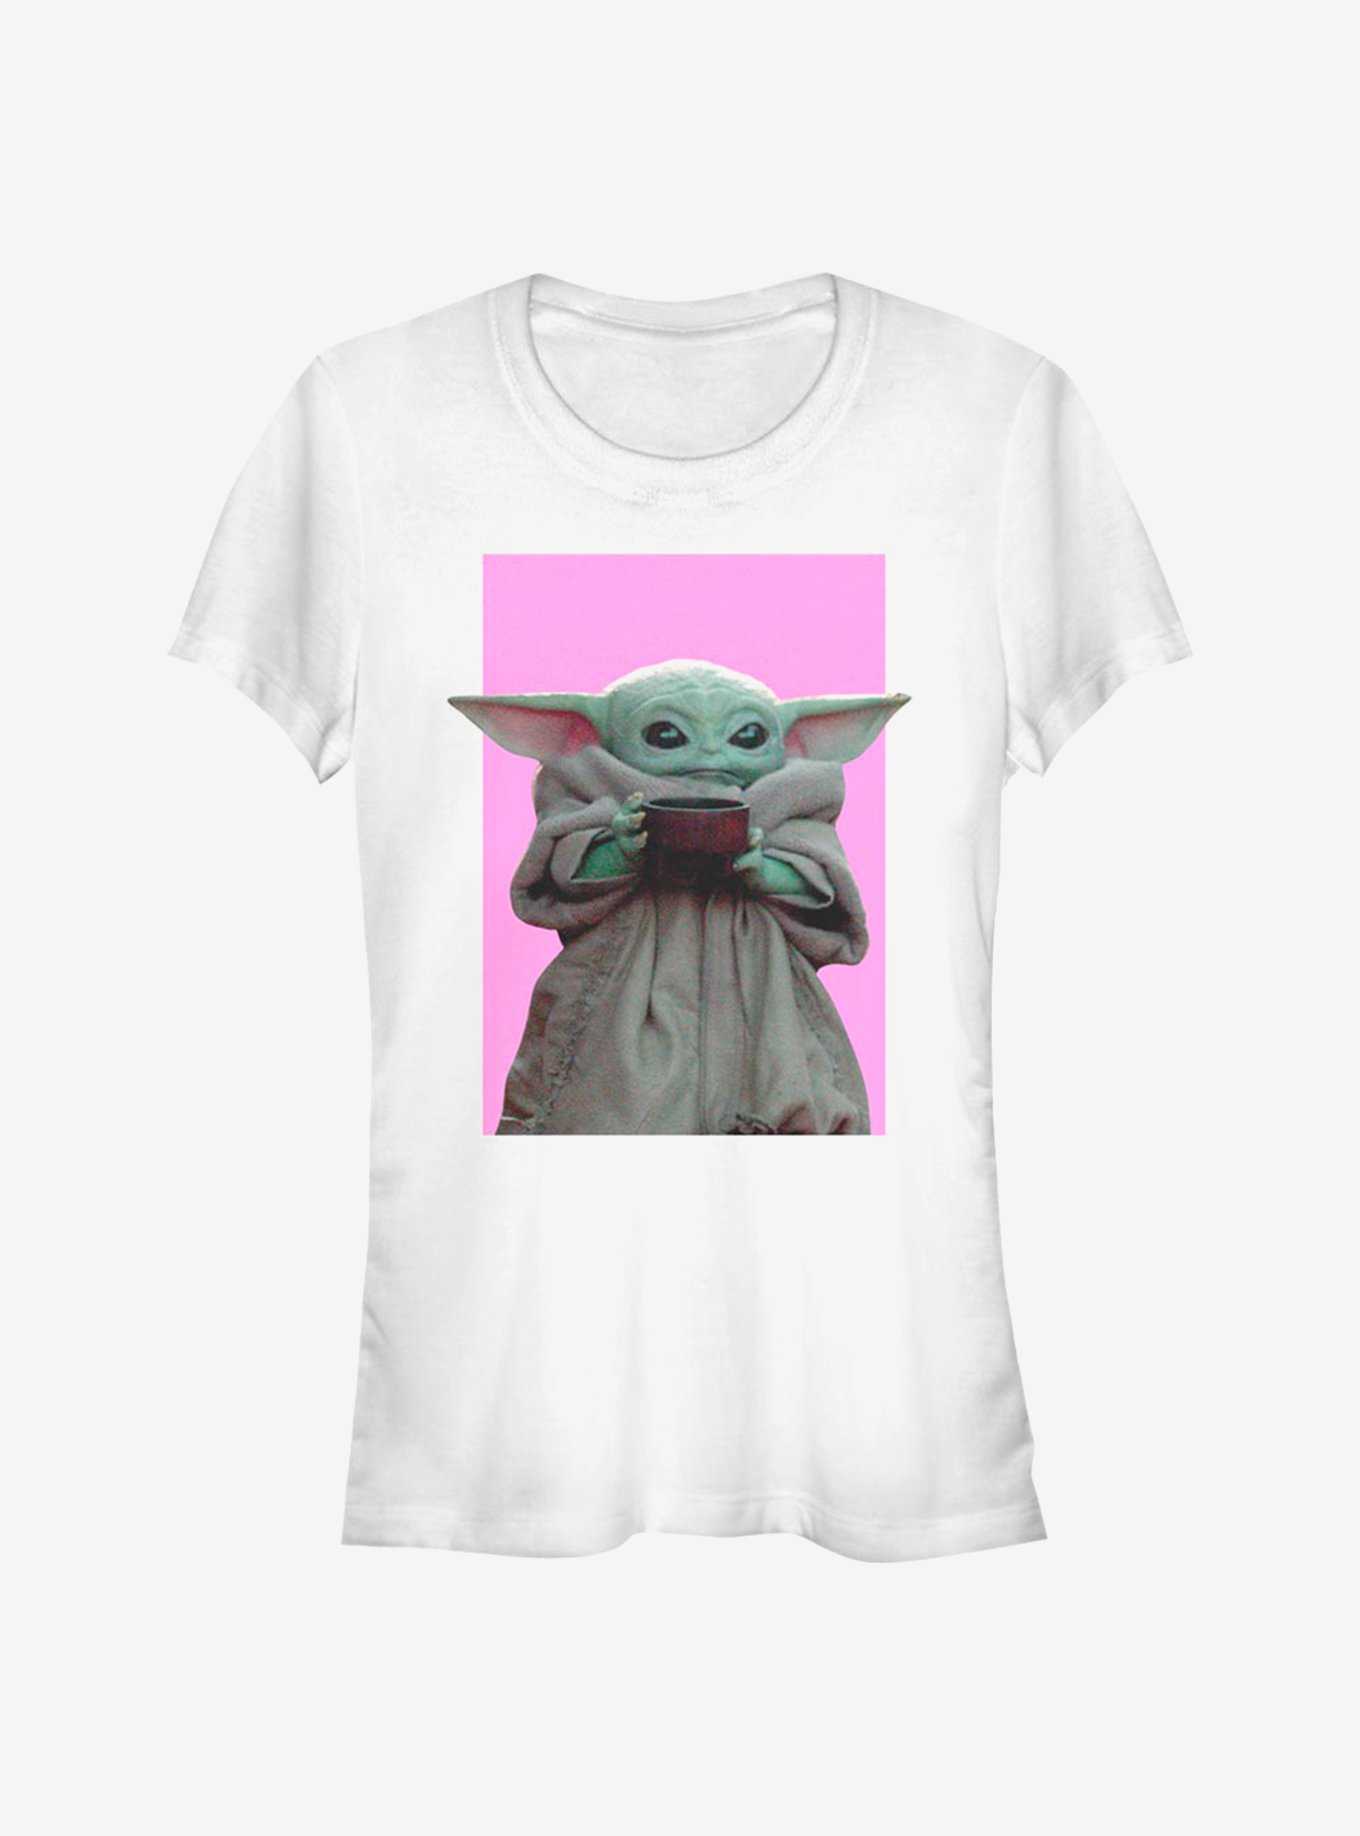 Star Wars The Mandalorian Pink The Child Girls T-Shirt, , hi-res